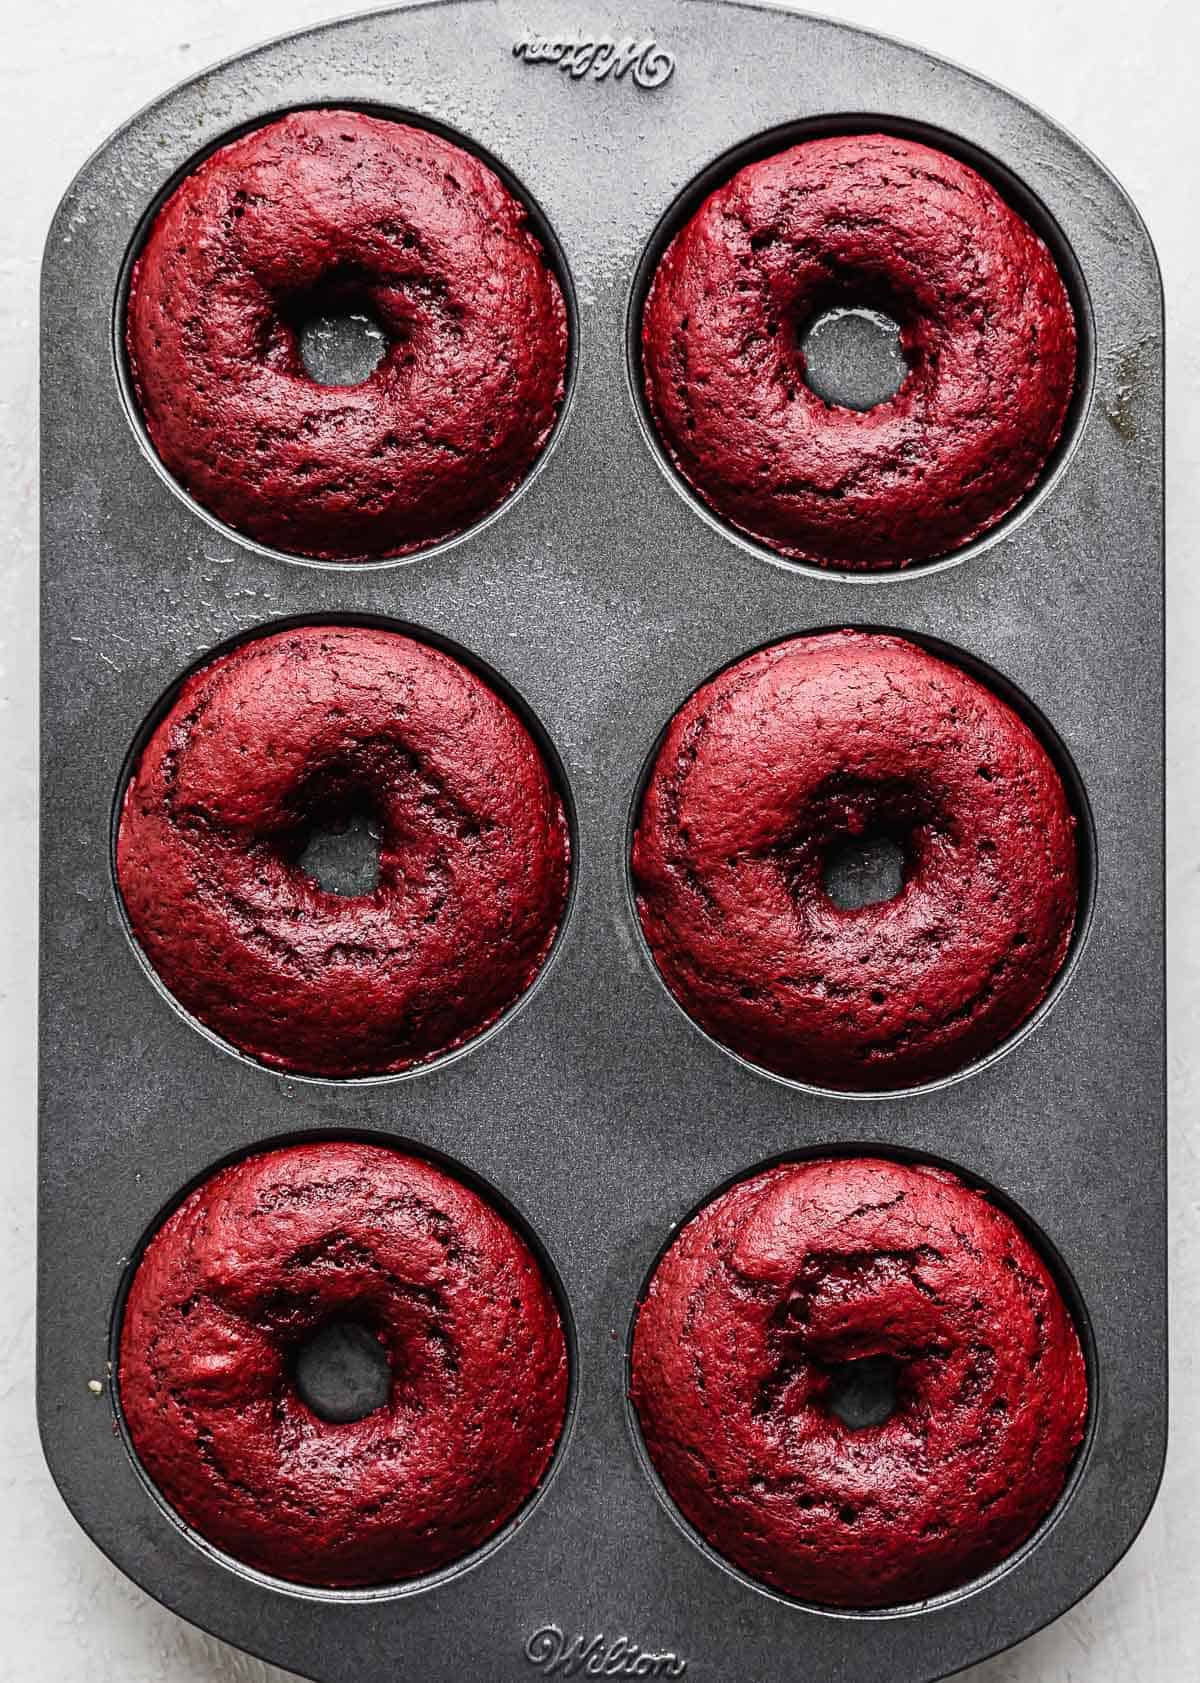 Baked Red Velvet Donuts in a donut pan.